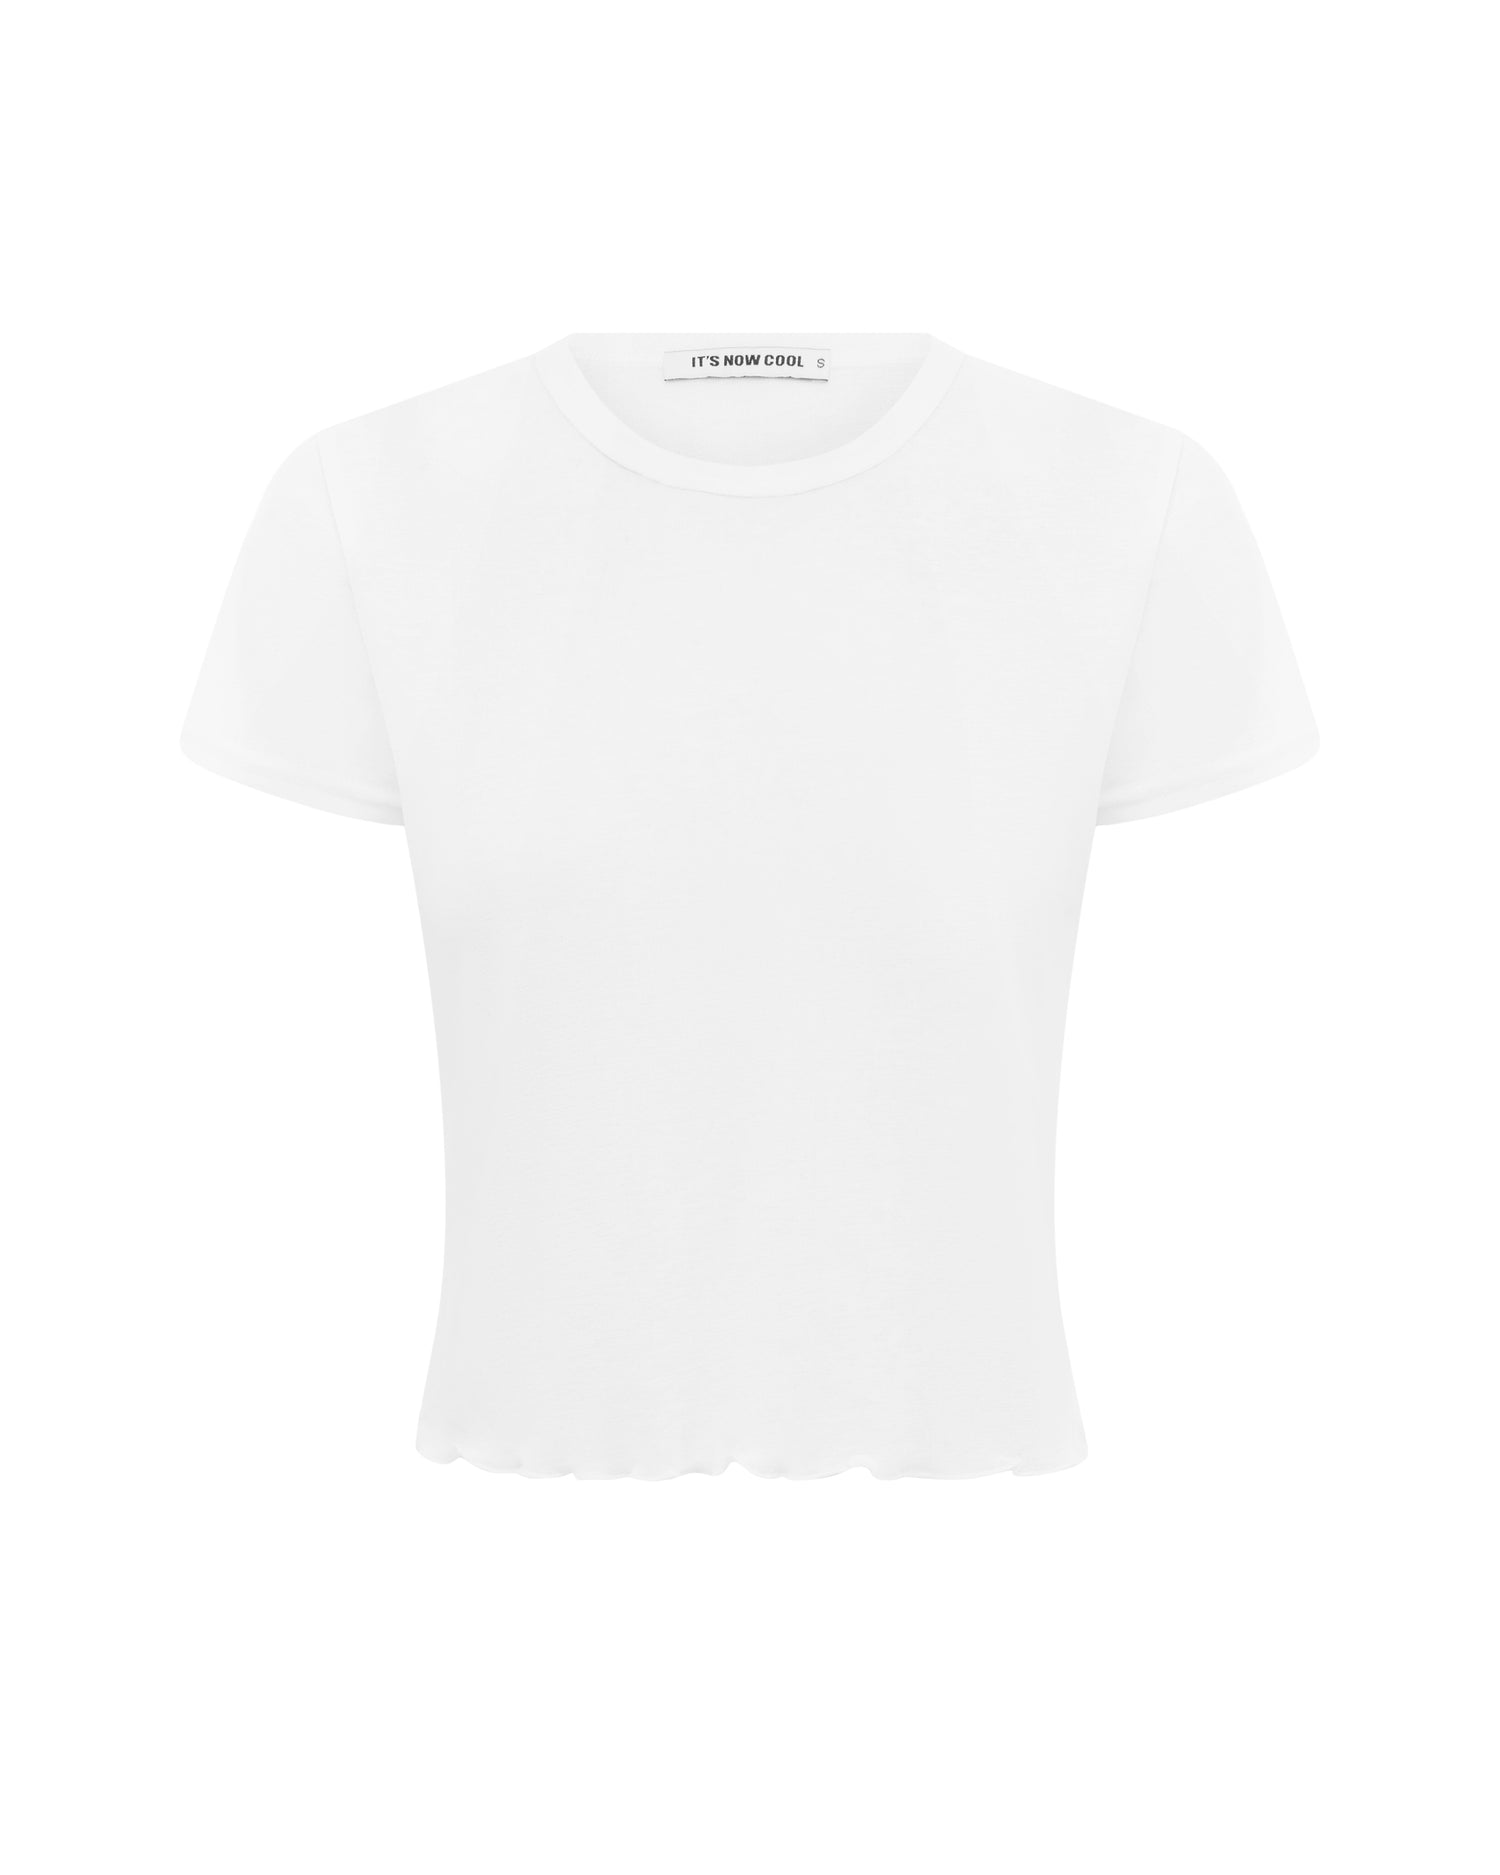 It's Now Cool Beachwear - Tee-shirt en maille - Blanc